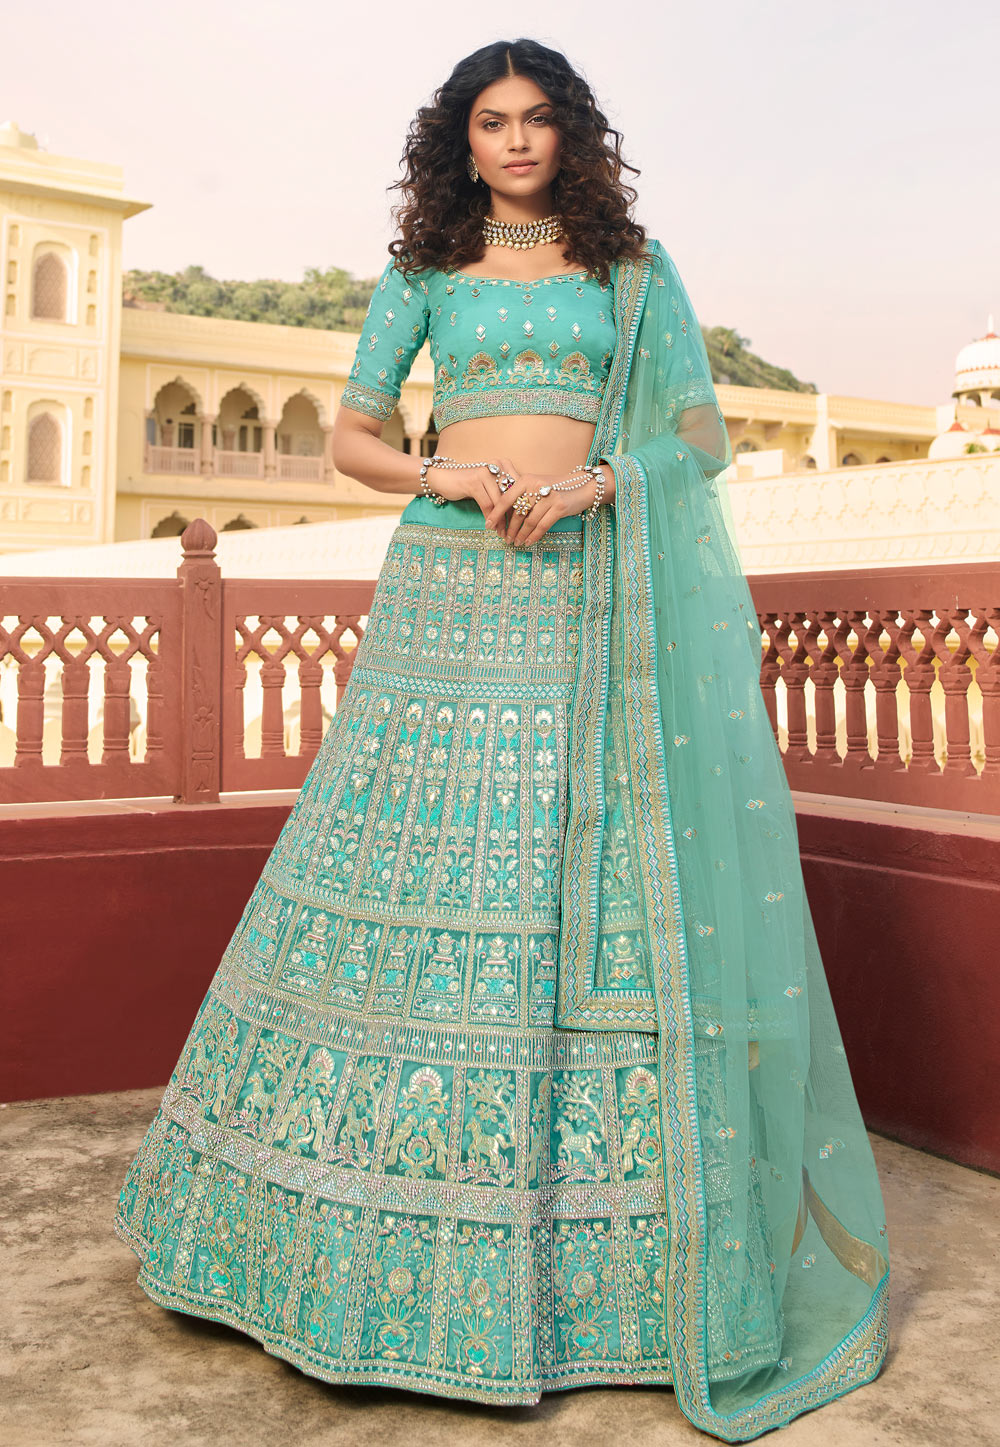 Anushka Sharma wore such a beautiful Lehenga for Diwali Celebration!! |  Diwali outfits, Indian fashion trends, Diwali dresses